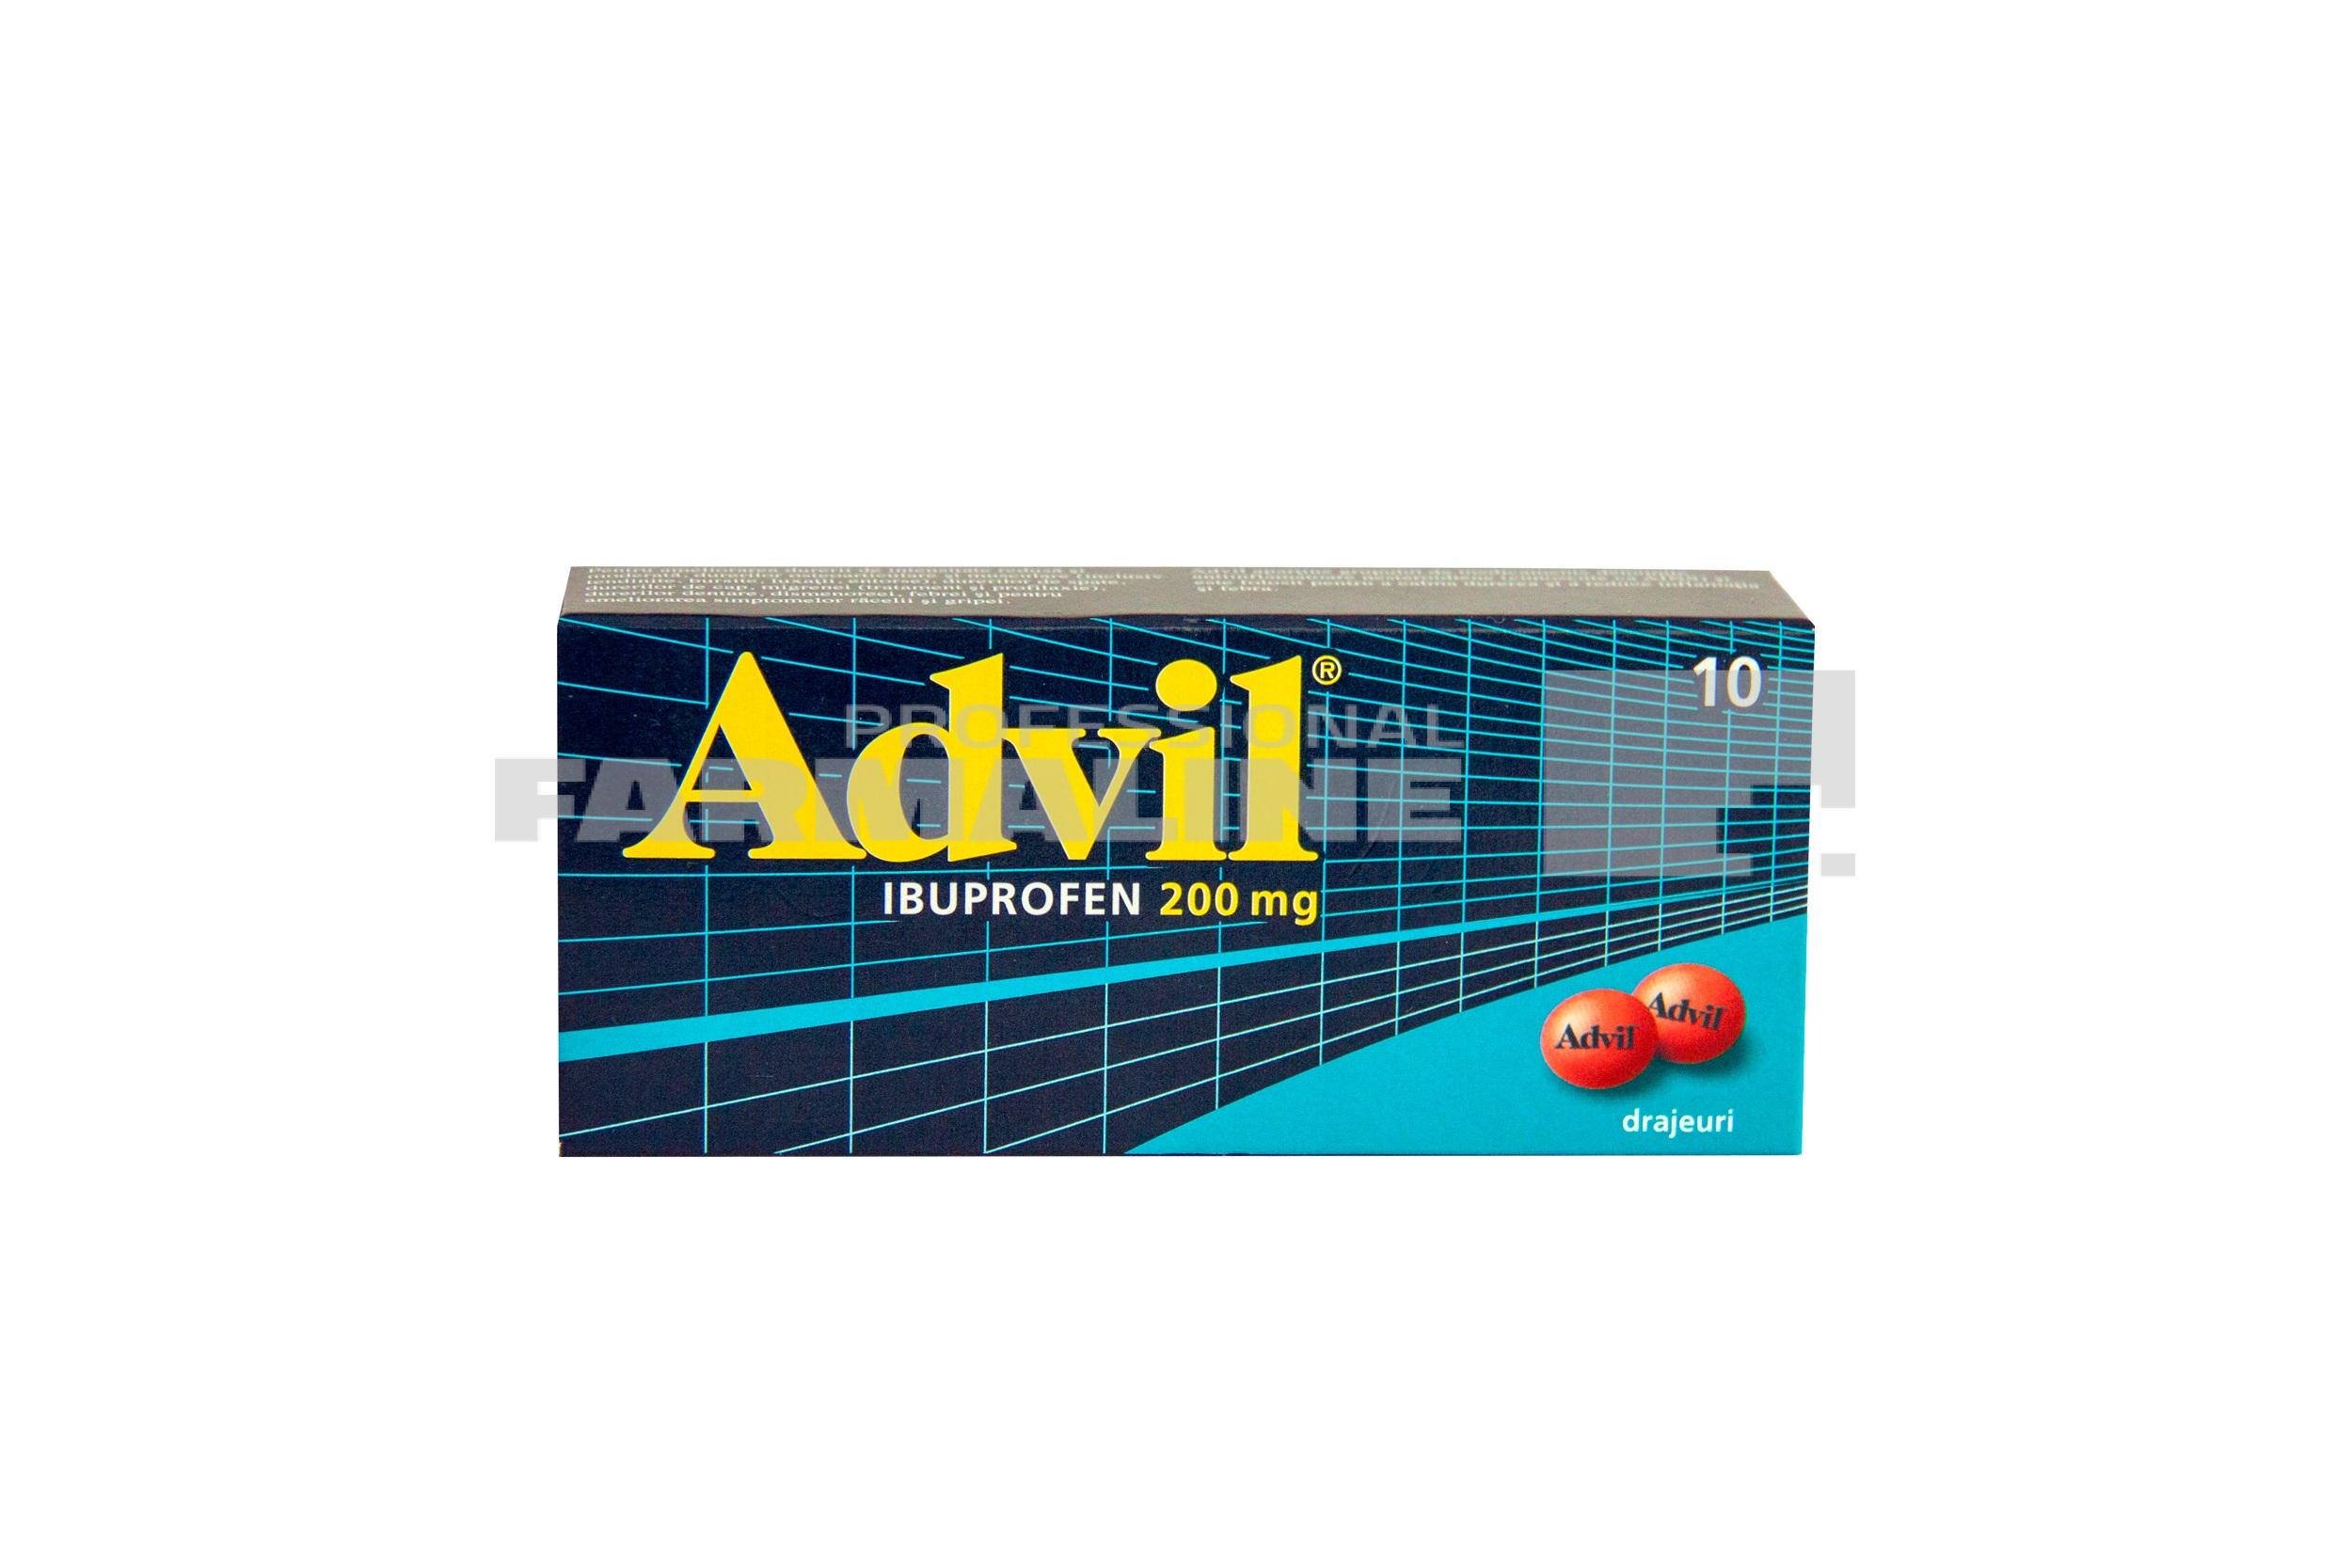 advil 200 mg 10 drajeuri 162106 1 1593003853